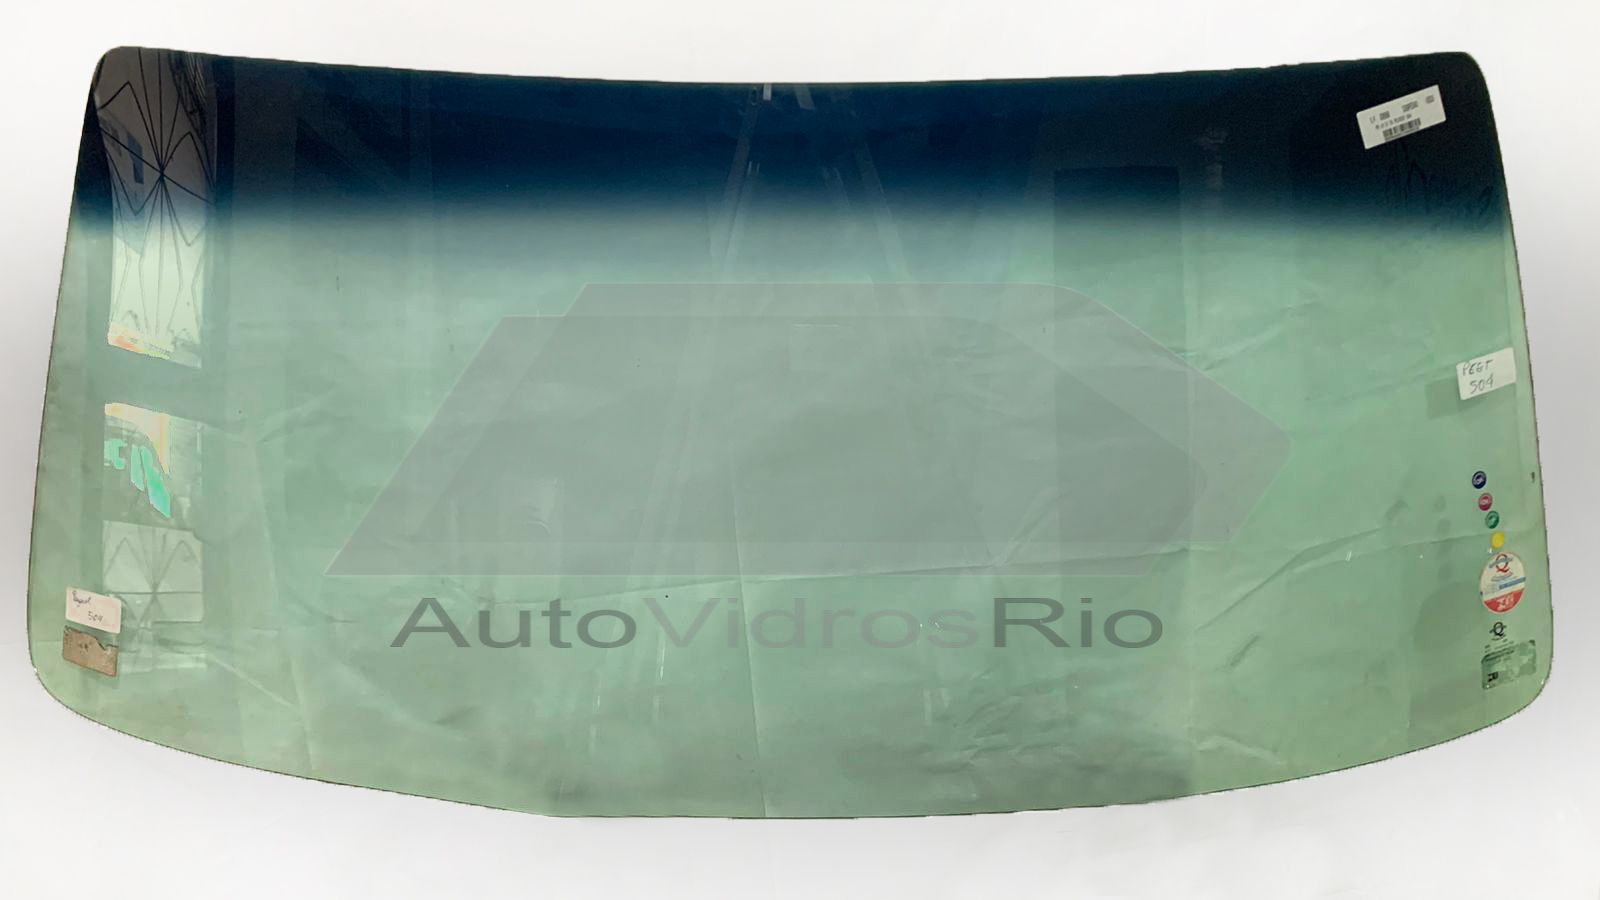 PARABRISA PEUGEOT 504 92-99 - Loja Auto Vidros Rio